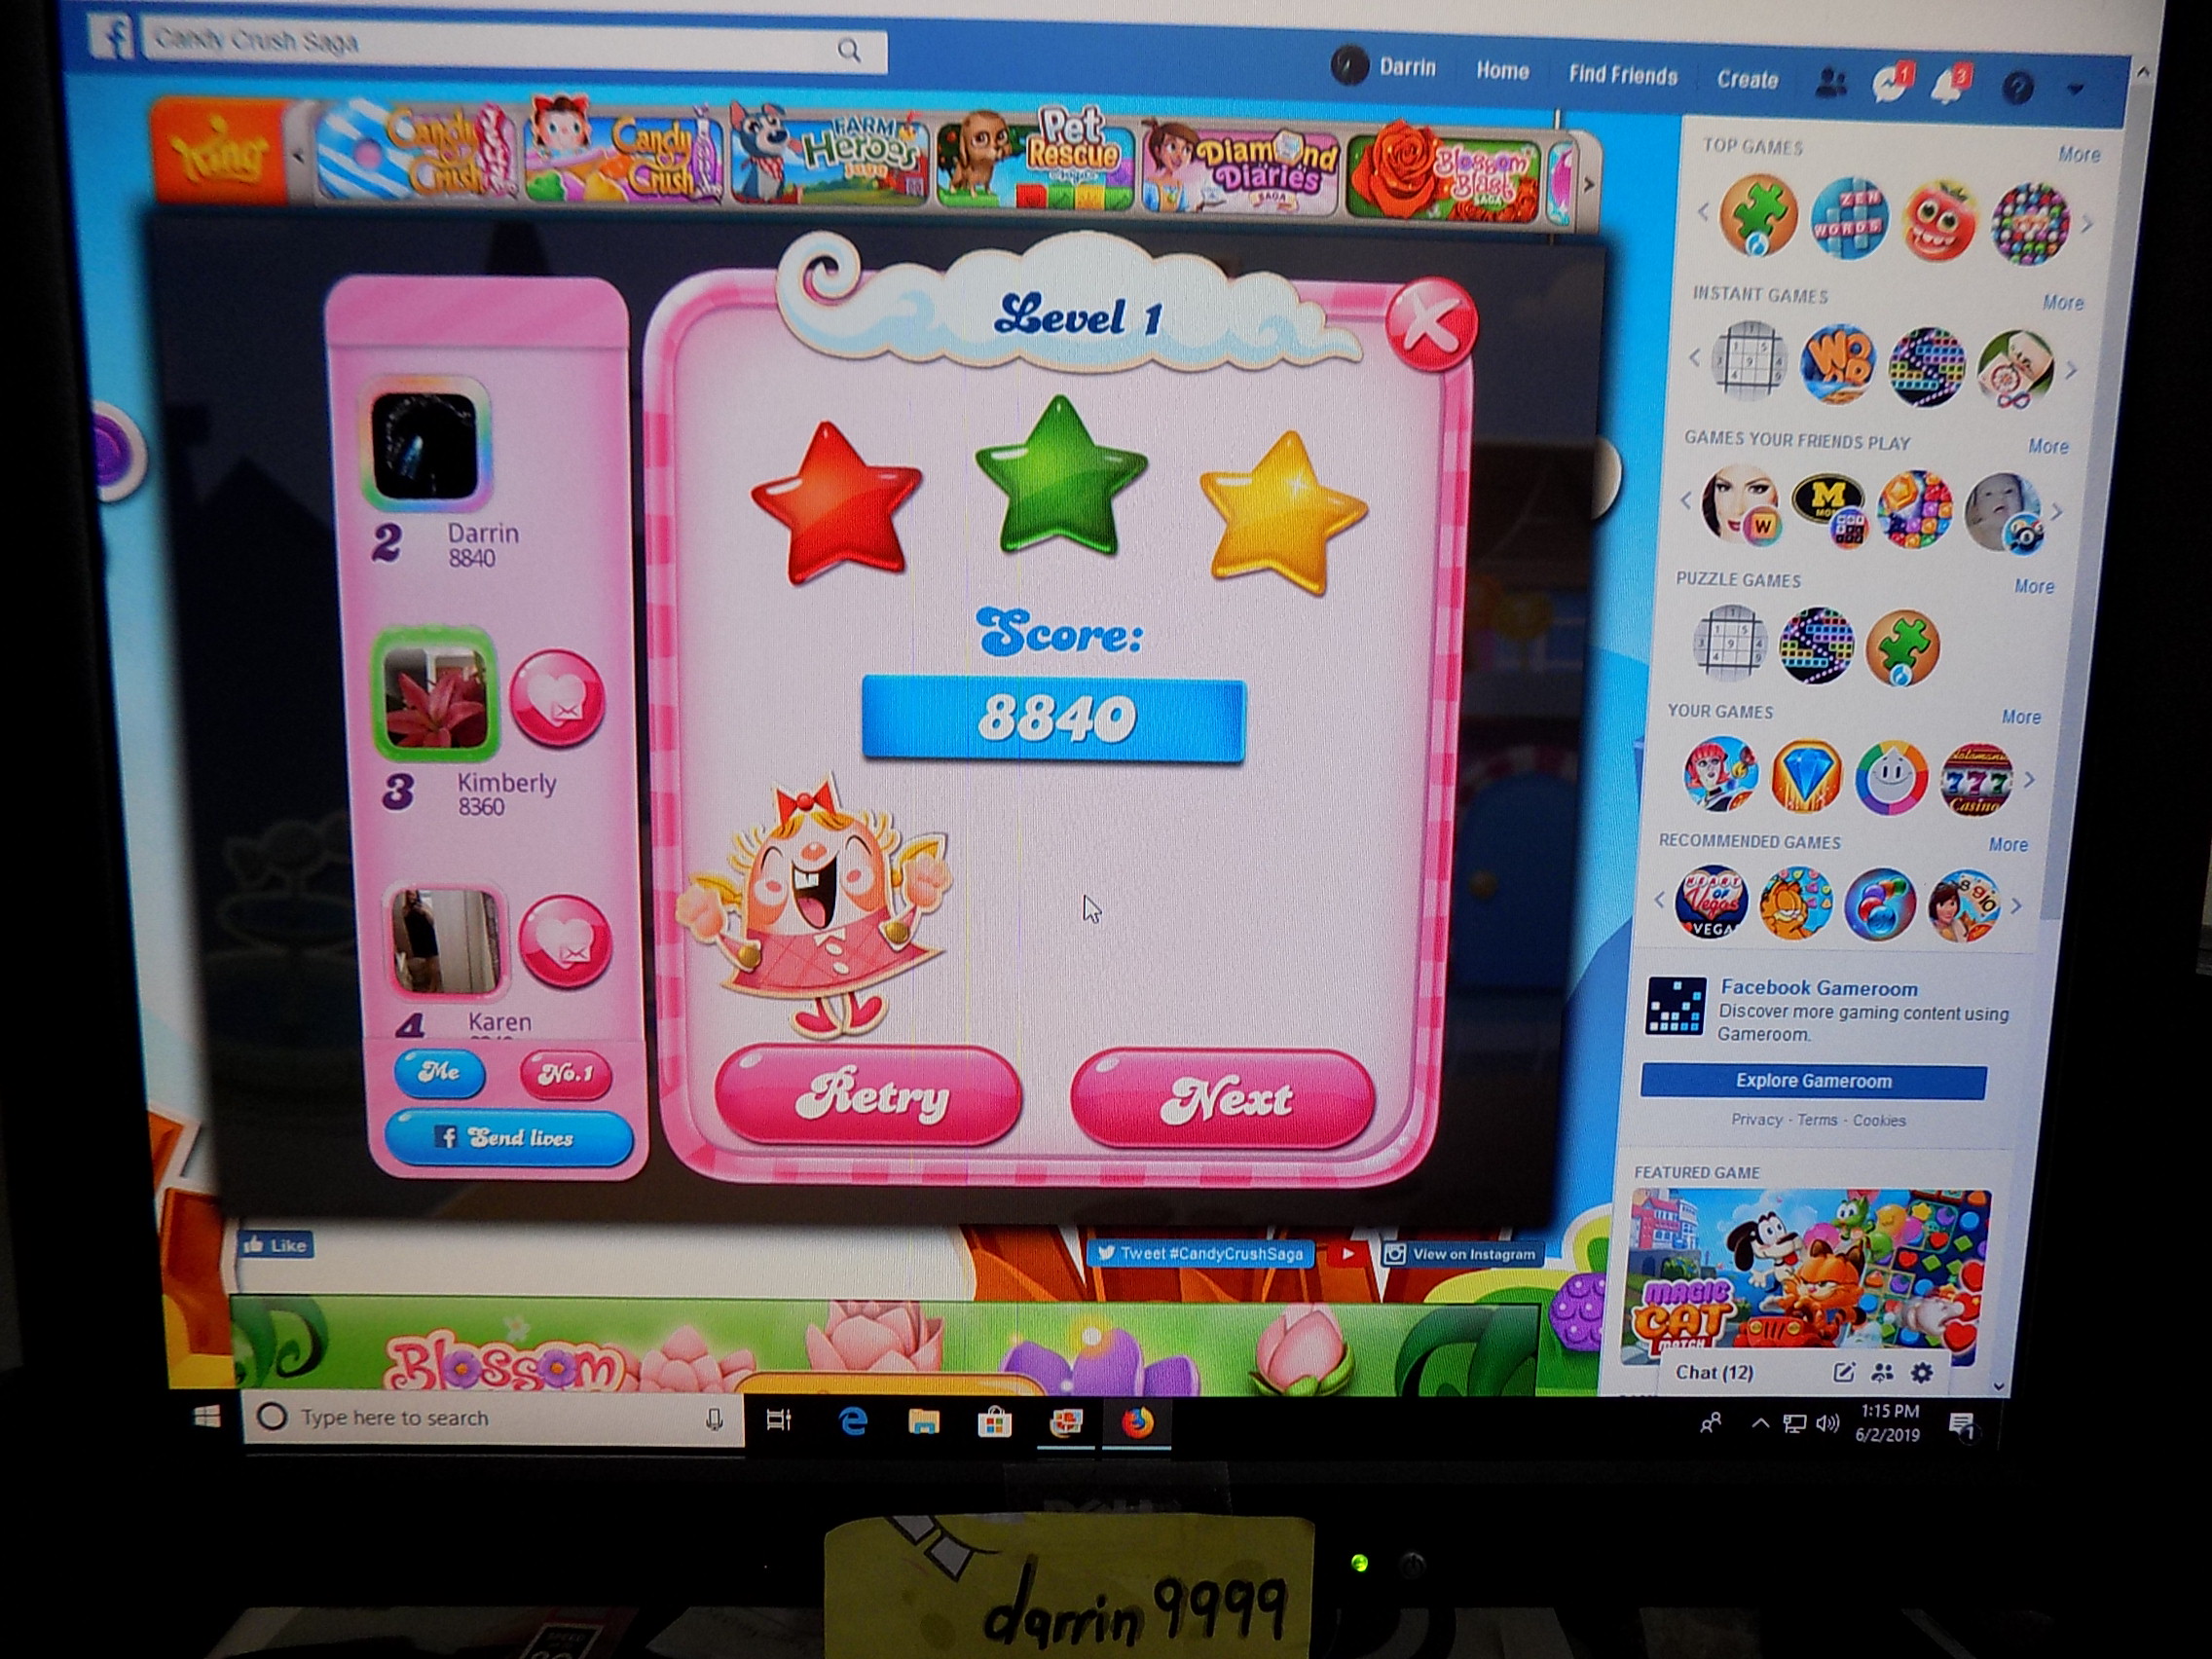 Candy Crush Saga: Level 001 8,840 points